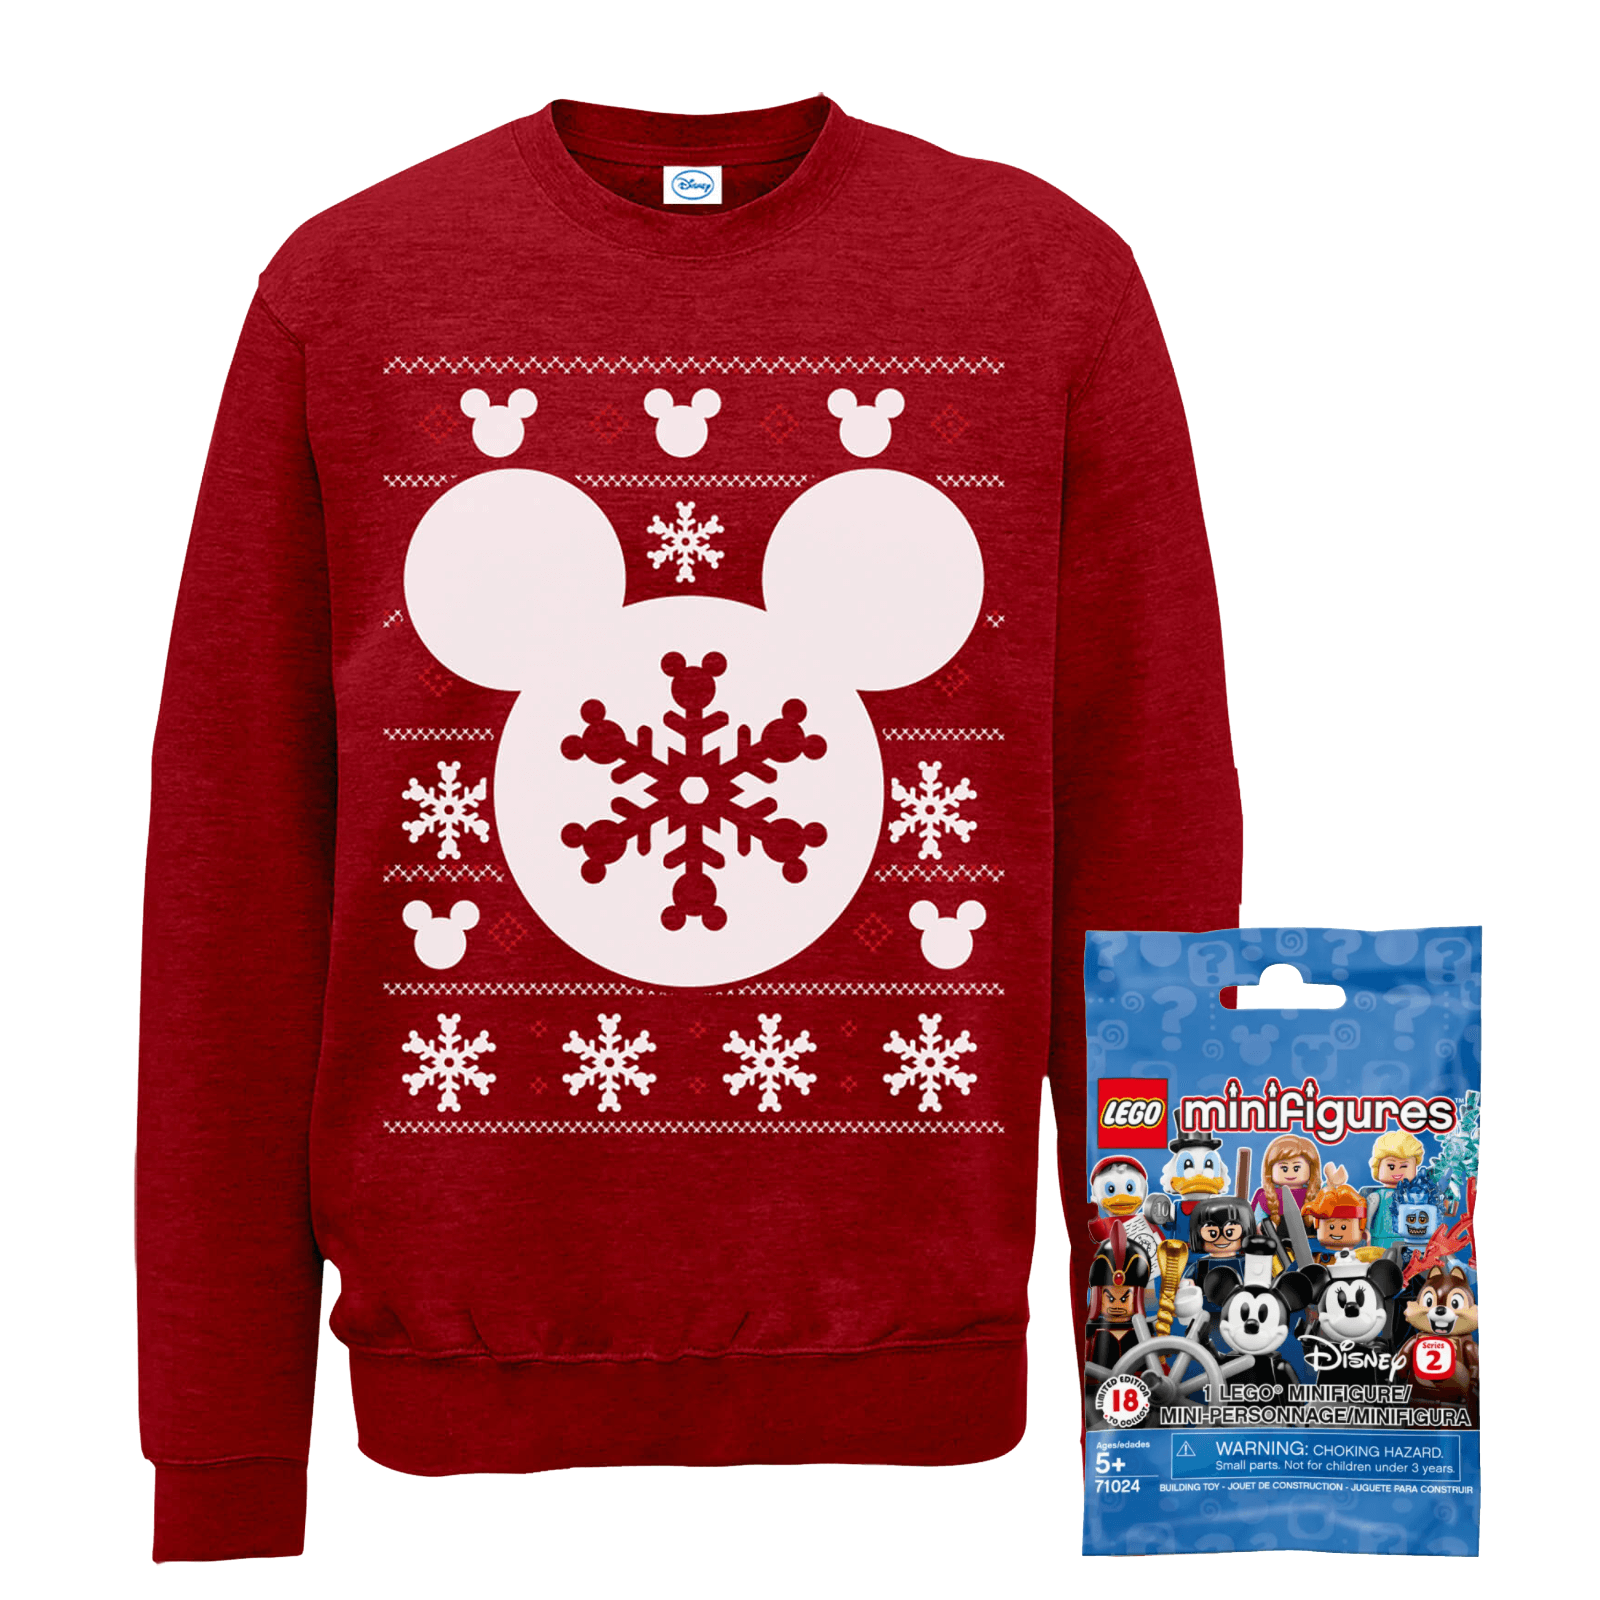 Disney Christmas Sweatshirt & Lego Minifigure Bundle - Kids' - 7-8 Years von Original Hero